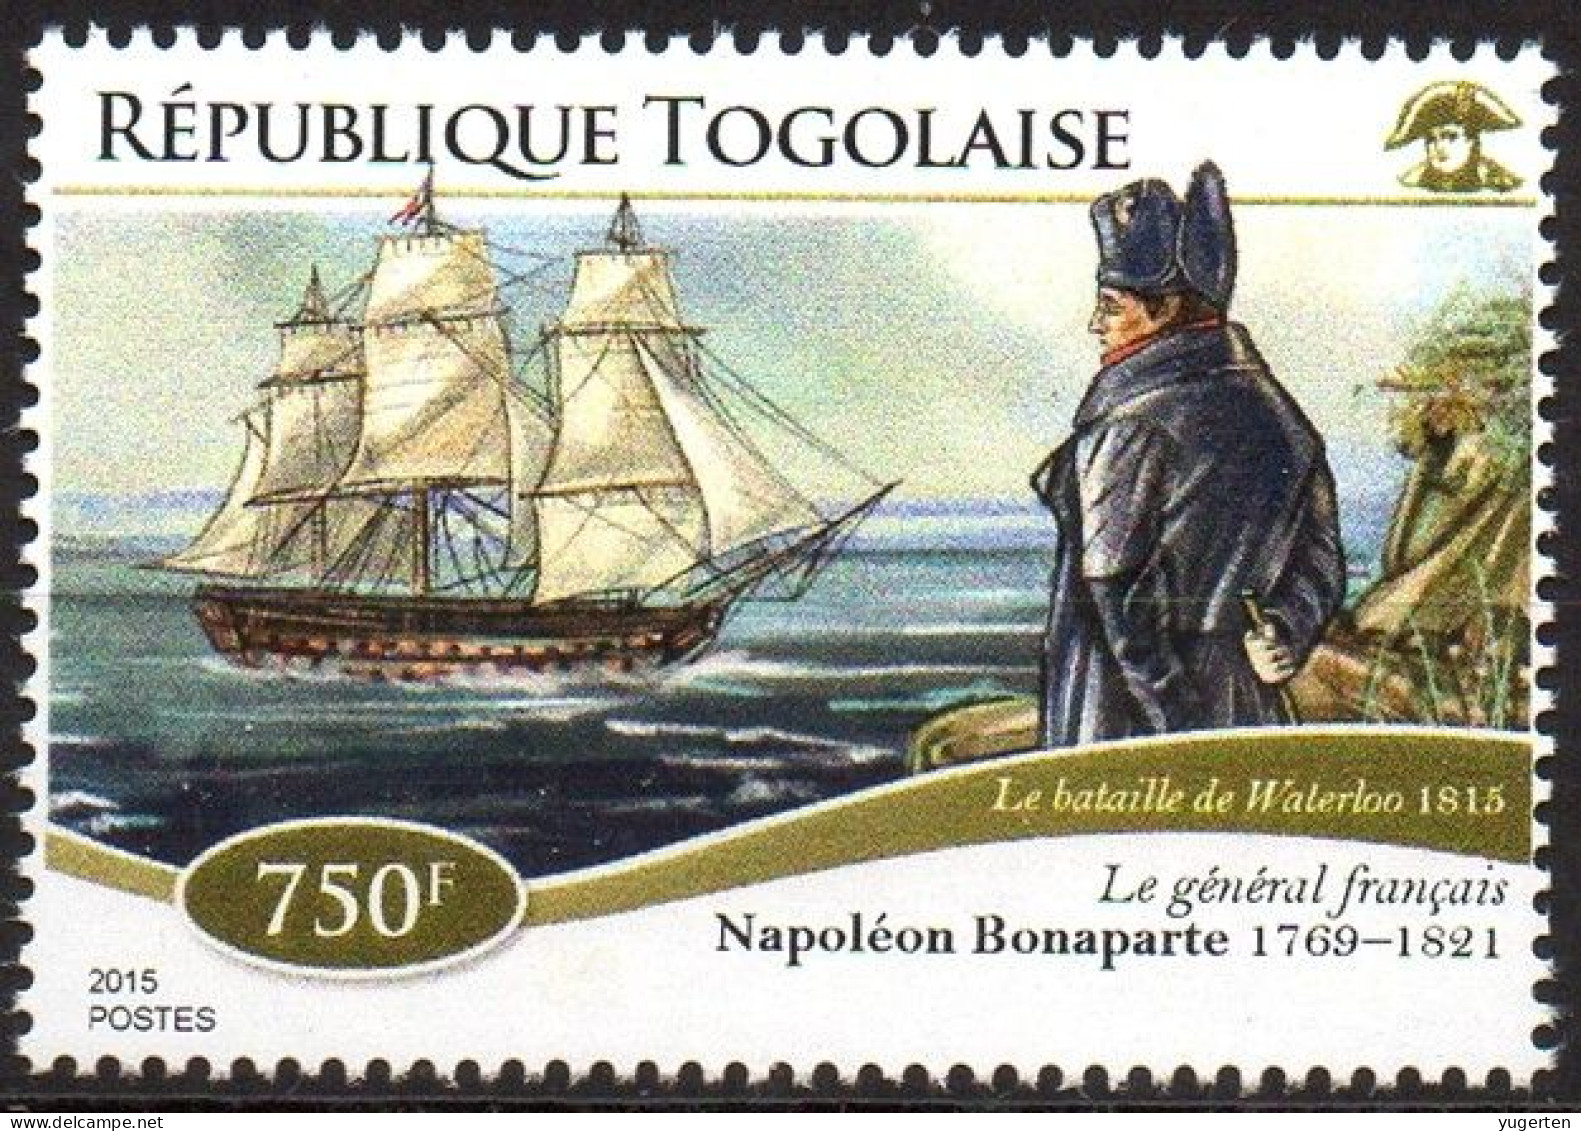 TOGO 2015 - 1v - MNH - 200th Anniversary Of Waterloo Battle - Napoleon Bonaparte - Napoleone - France - Ship - Napoléon